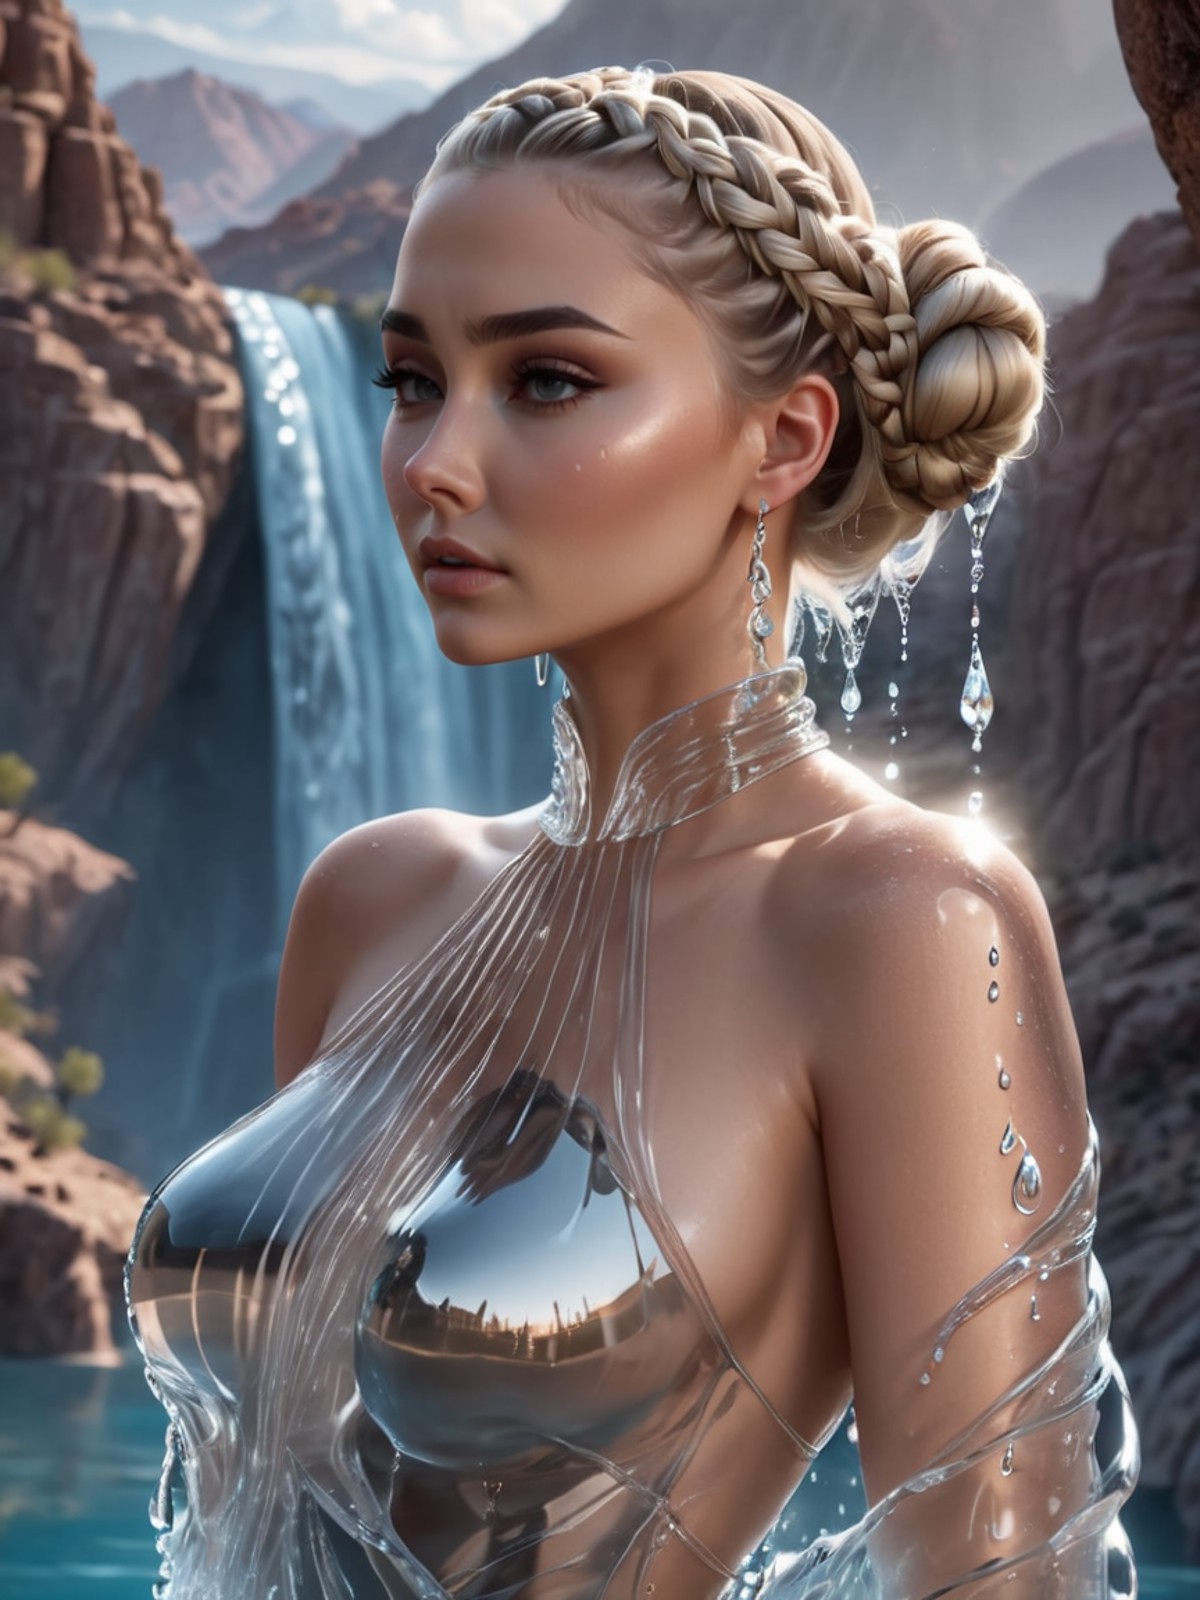 breathtaking beautiful woman wearing a (water dress) Arching in New Vegas, <lora:xl_water_dress-1.0:0.8>, 
Crane Shot, fro...